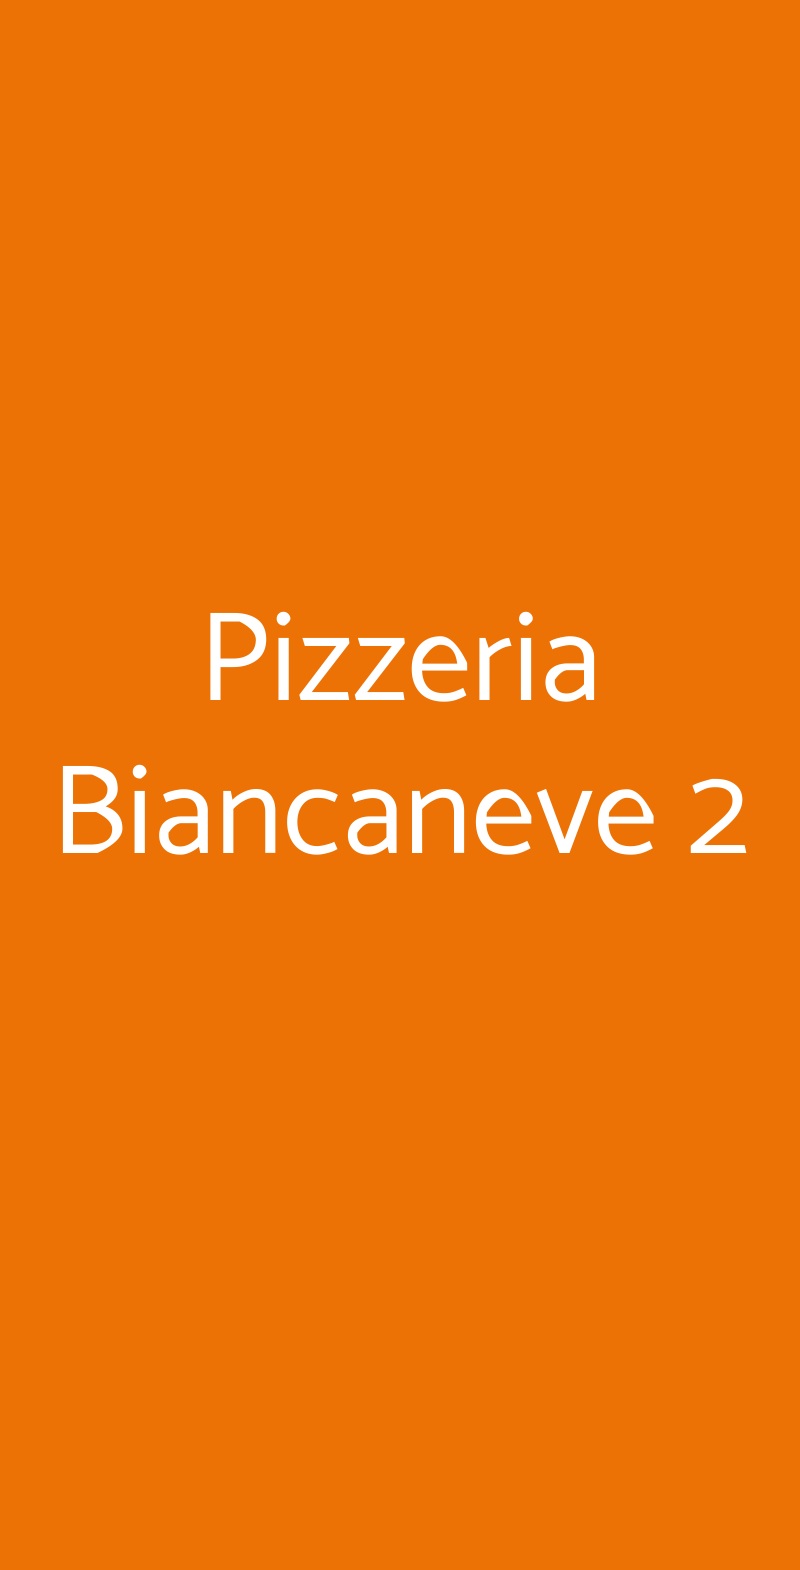 Pizzeria Biancaneve 2 Firenze menù 1 pagina